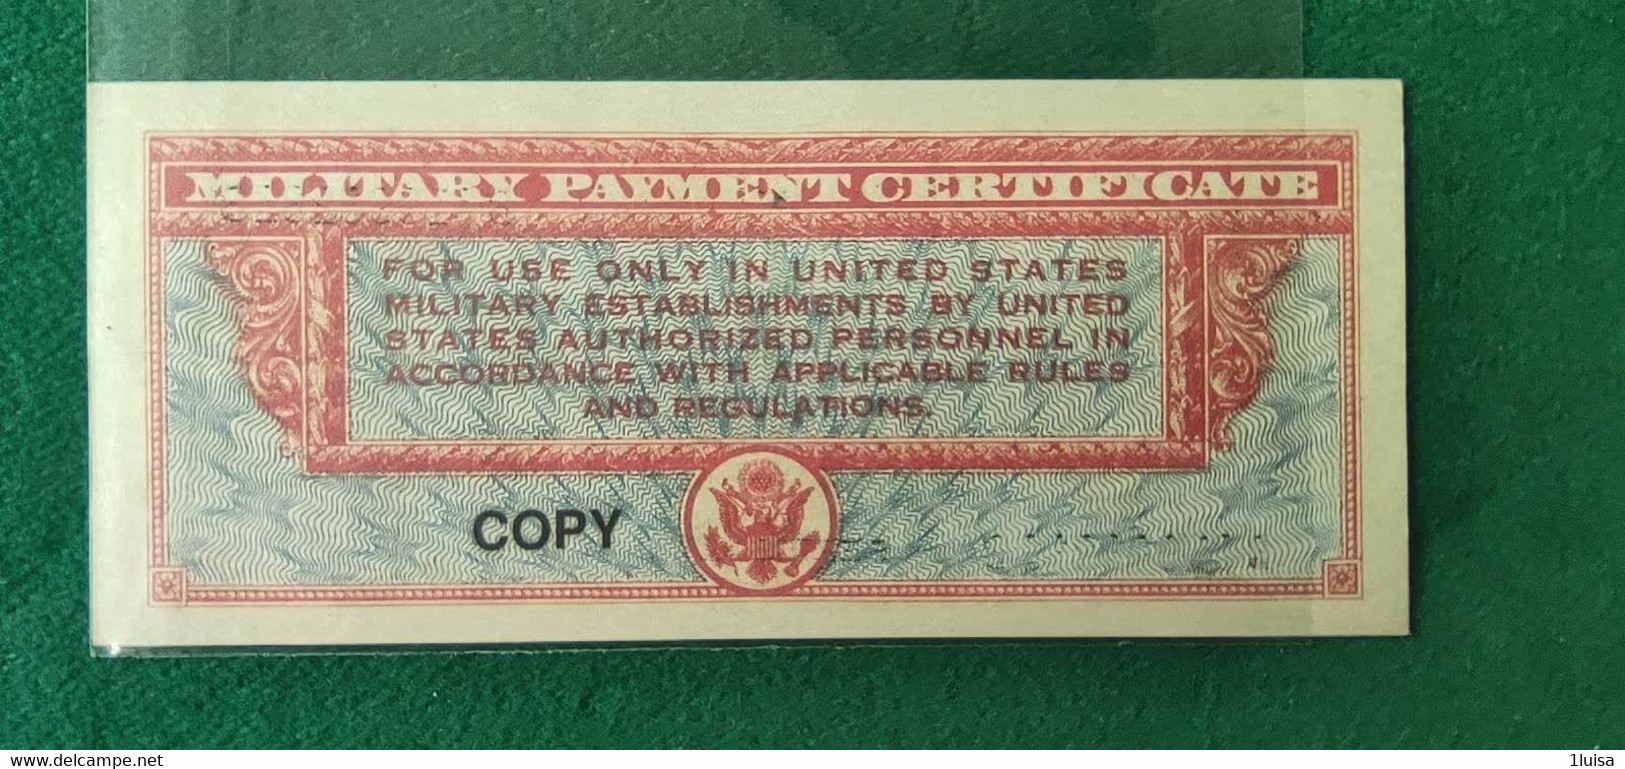 STATI UNITI 10 Dollars Serie 471 COPY - 1947-1948 - Serie 471